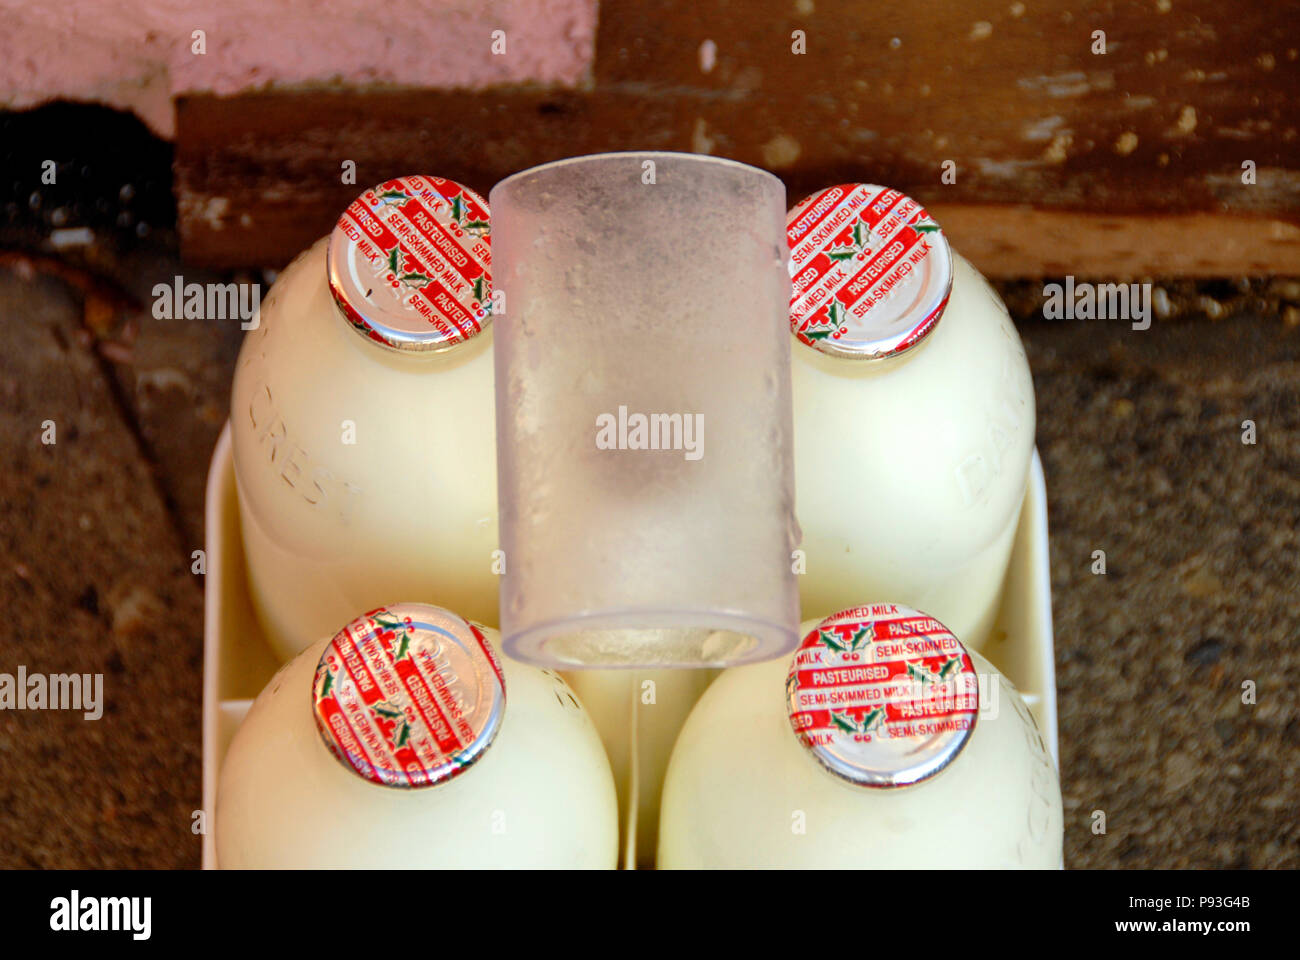 https://c8.alamy.com/comp/P93G4B/special-milk-bottle-tops-with-christmas-decoration-england-P93G4B.jpg